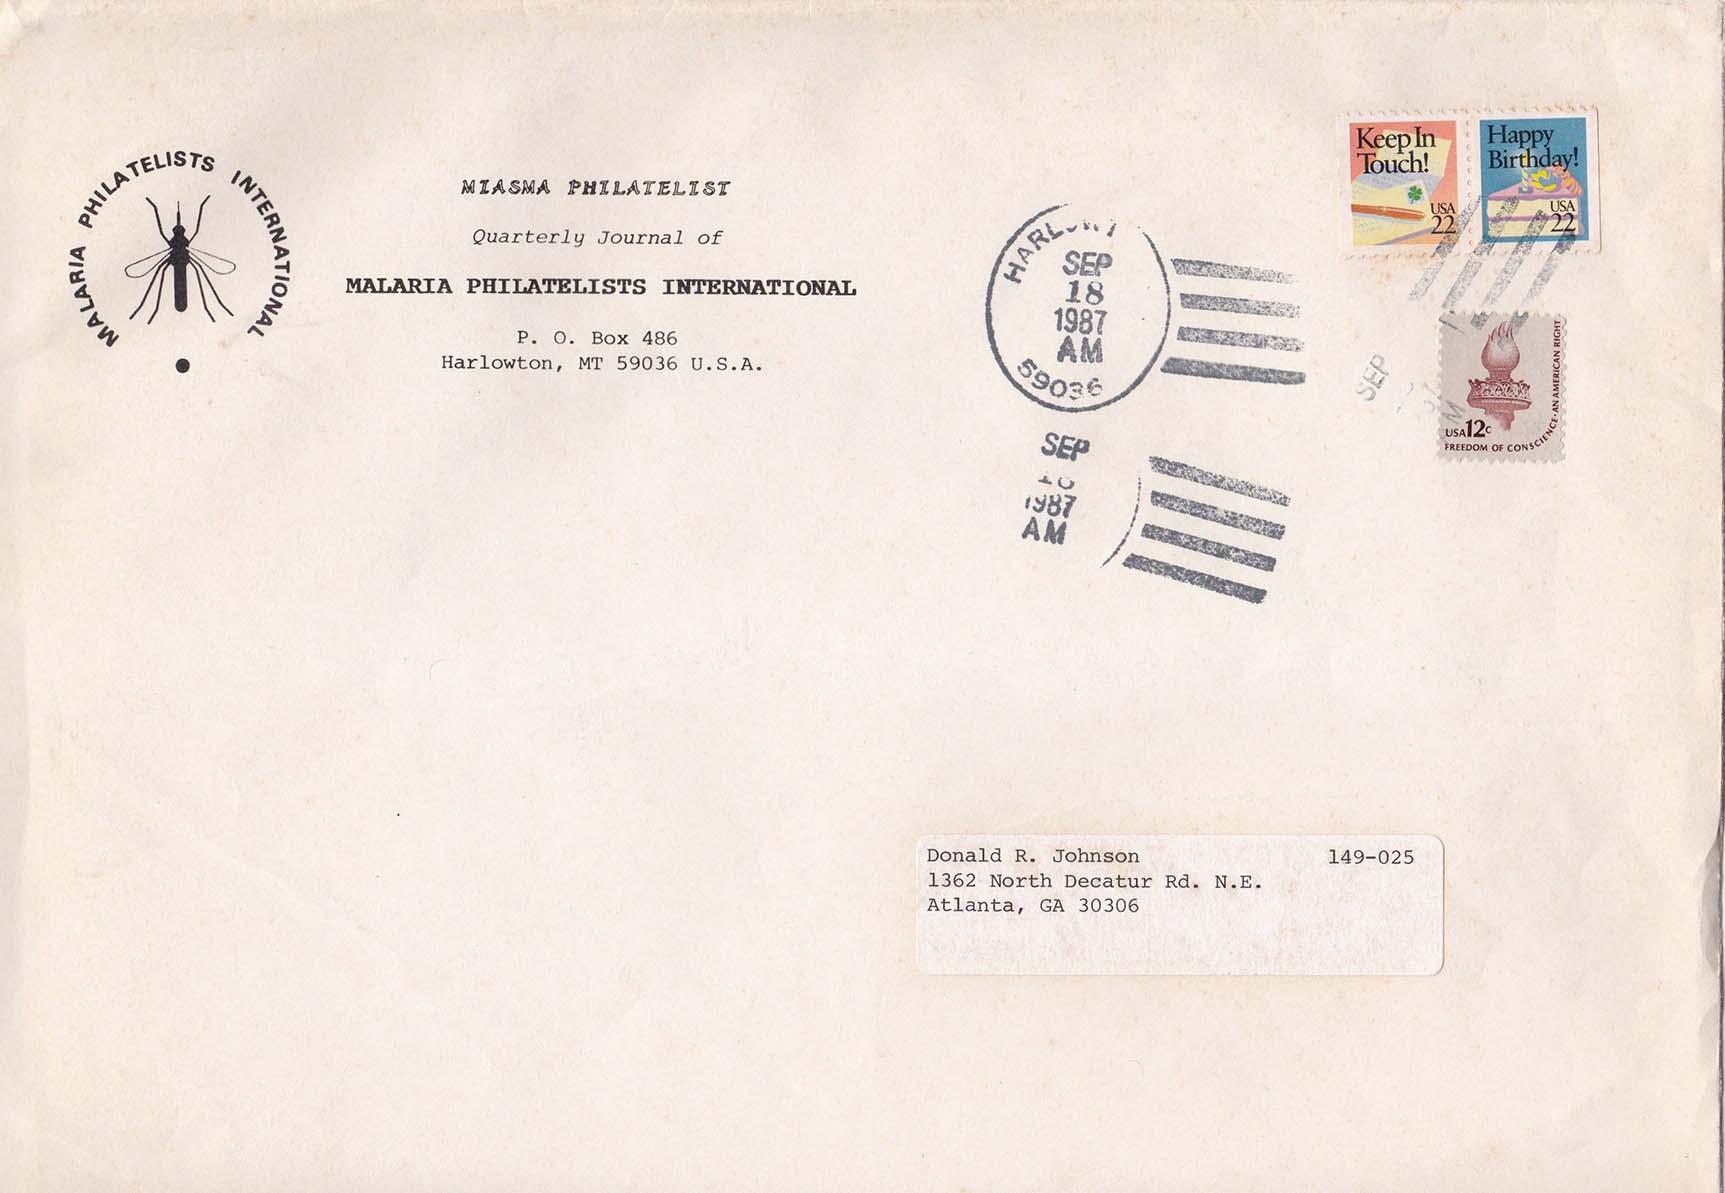 MPI Cover Sent To Donald R. Johnson September 18, 1987